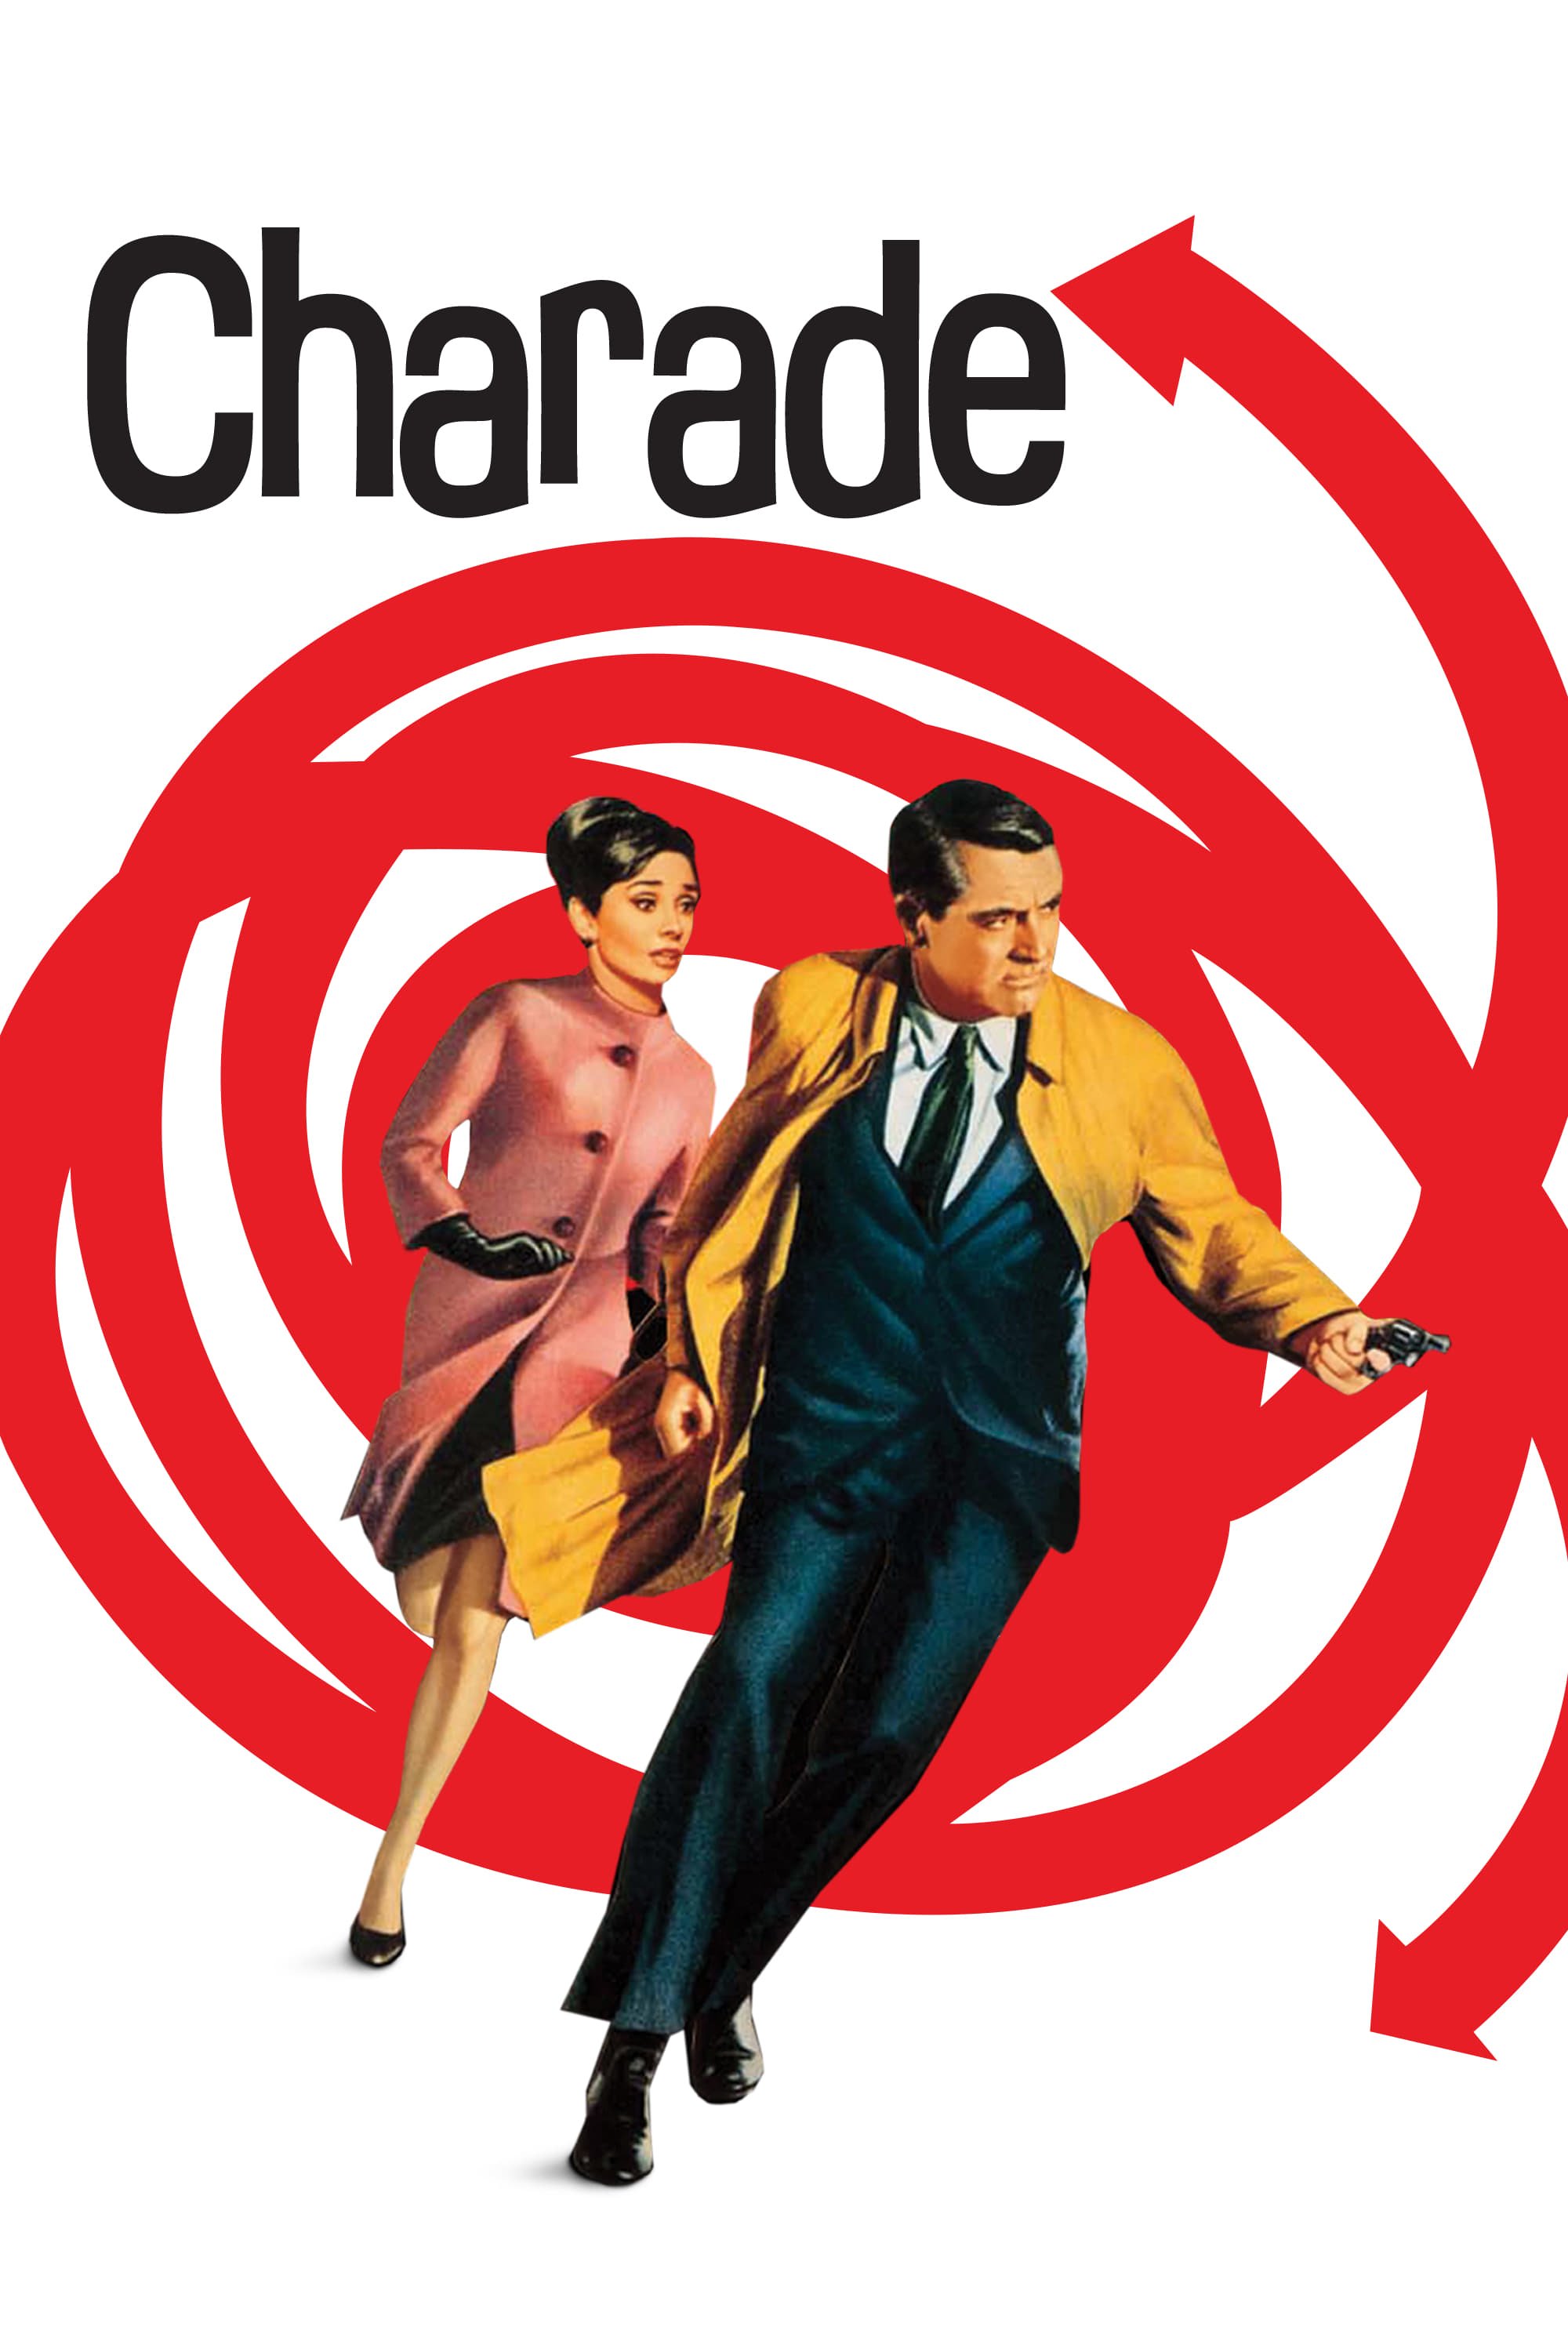 Charada (1963)